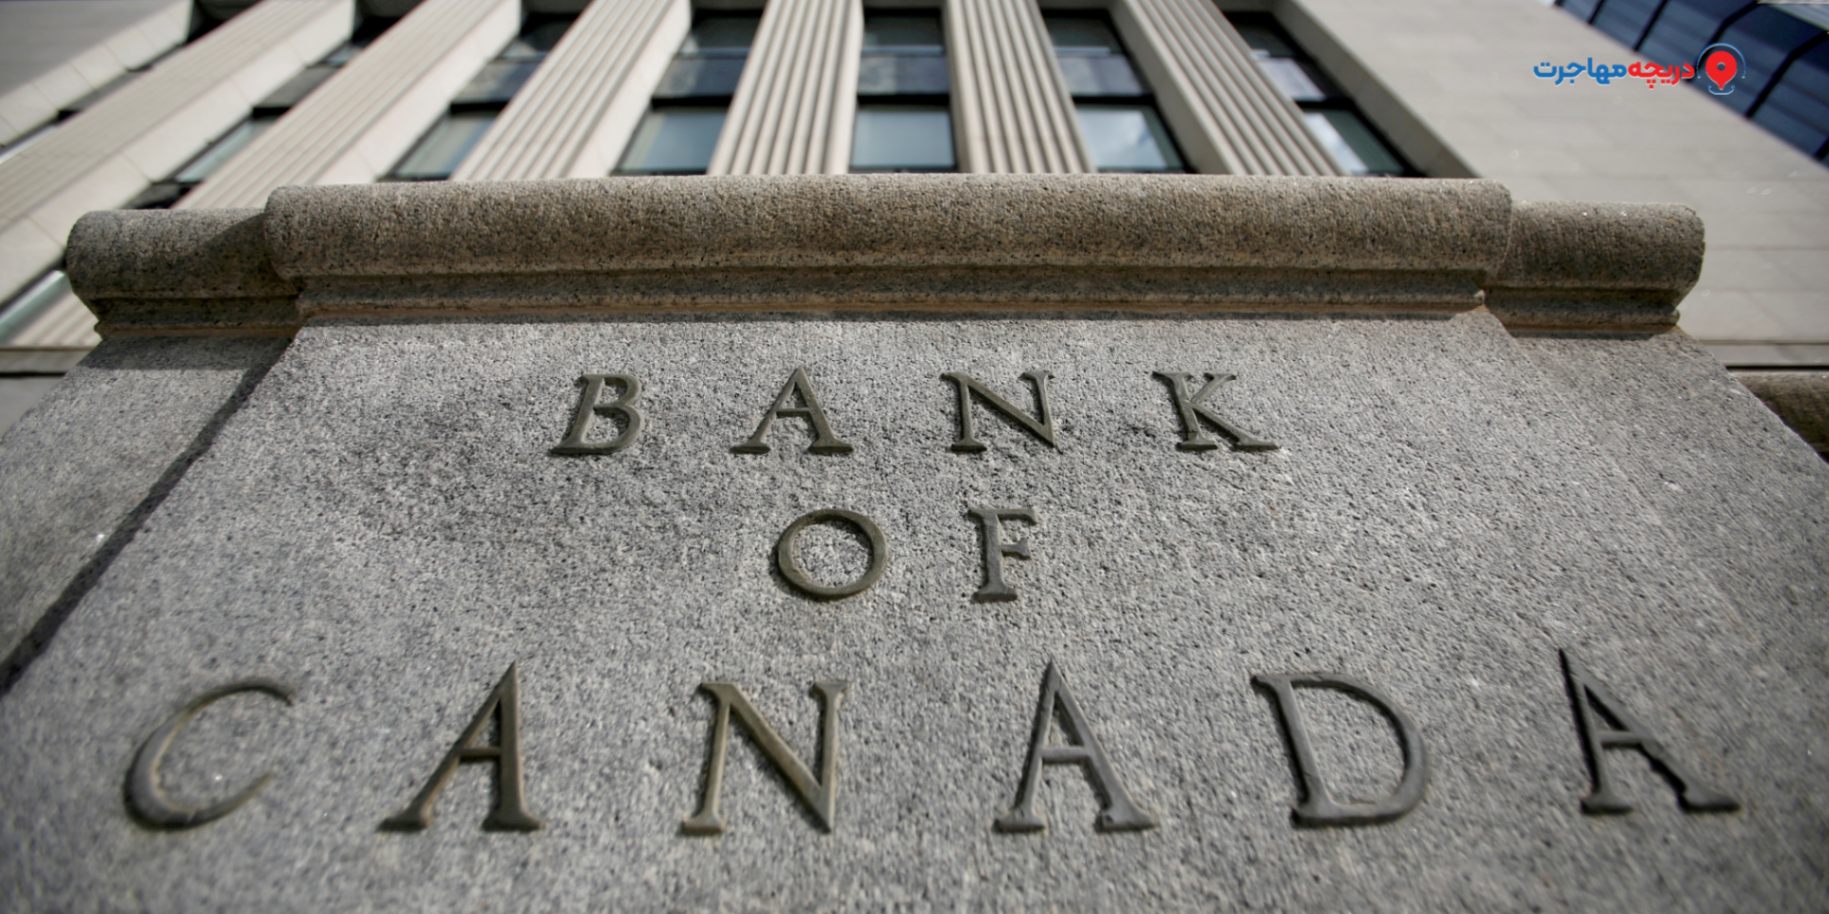 حساب بانکی در کانادا | بانک کانادا